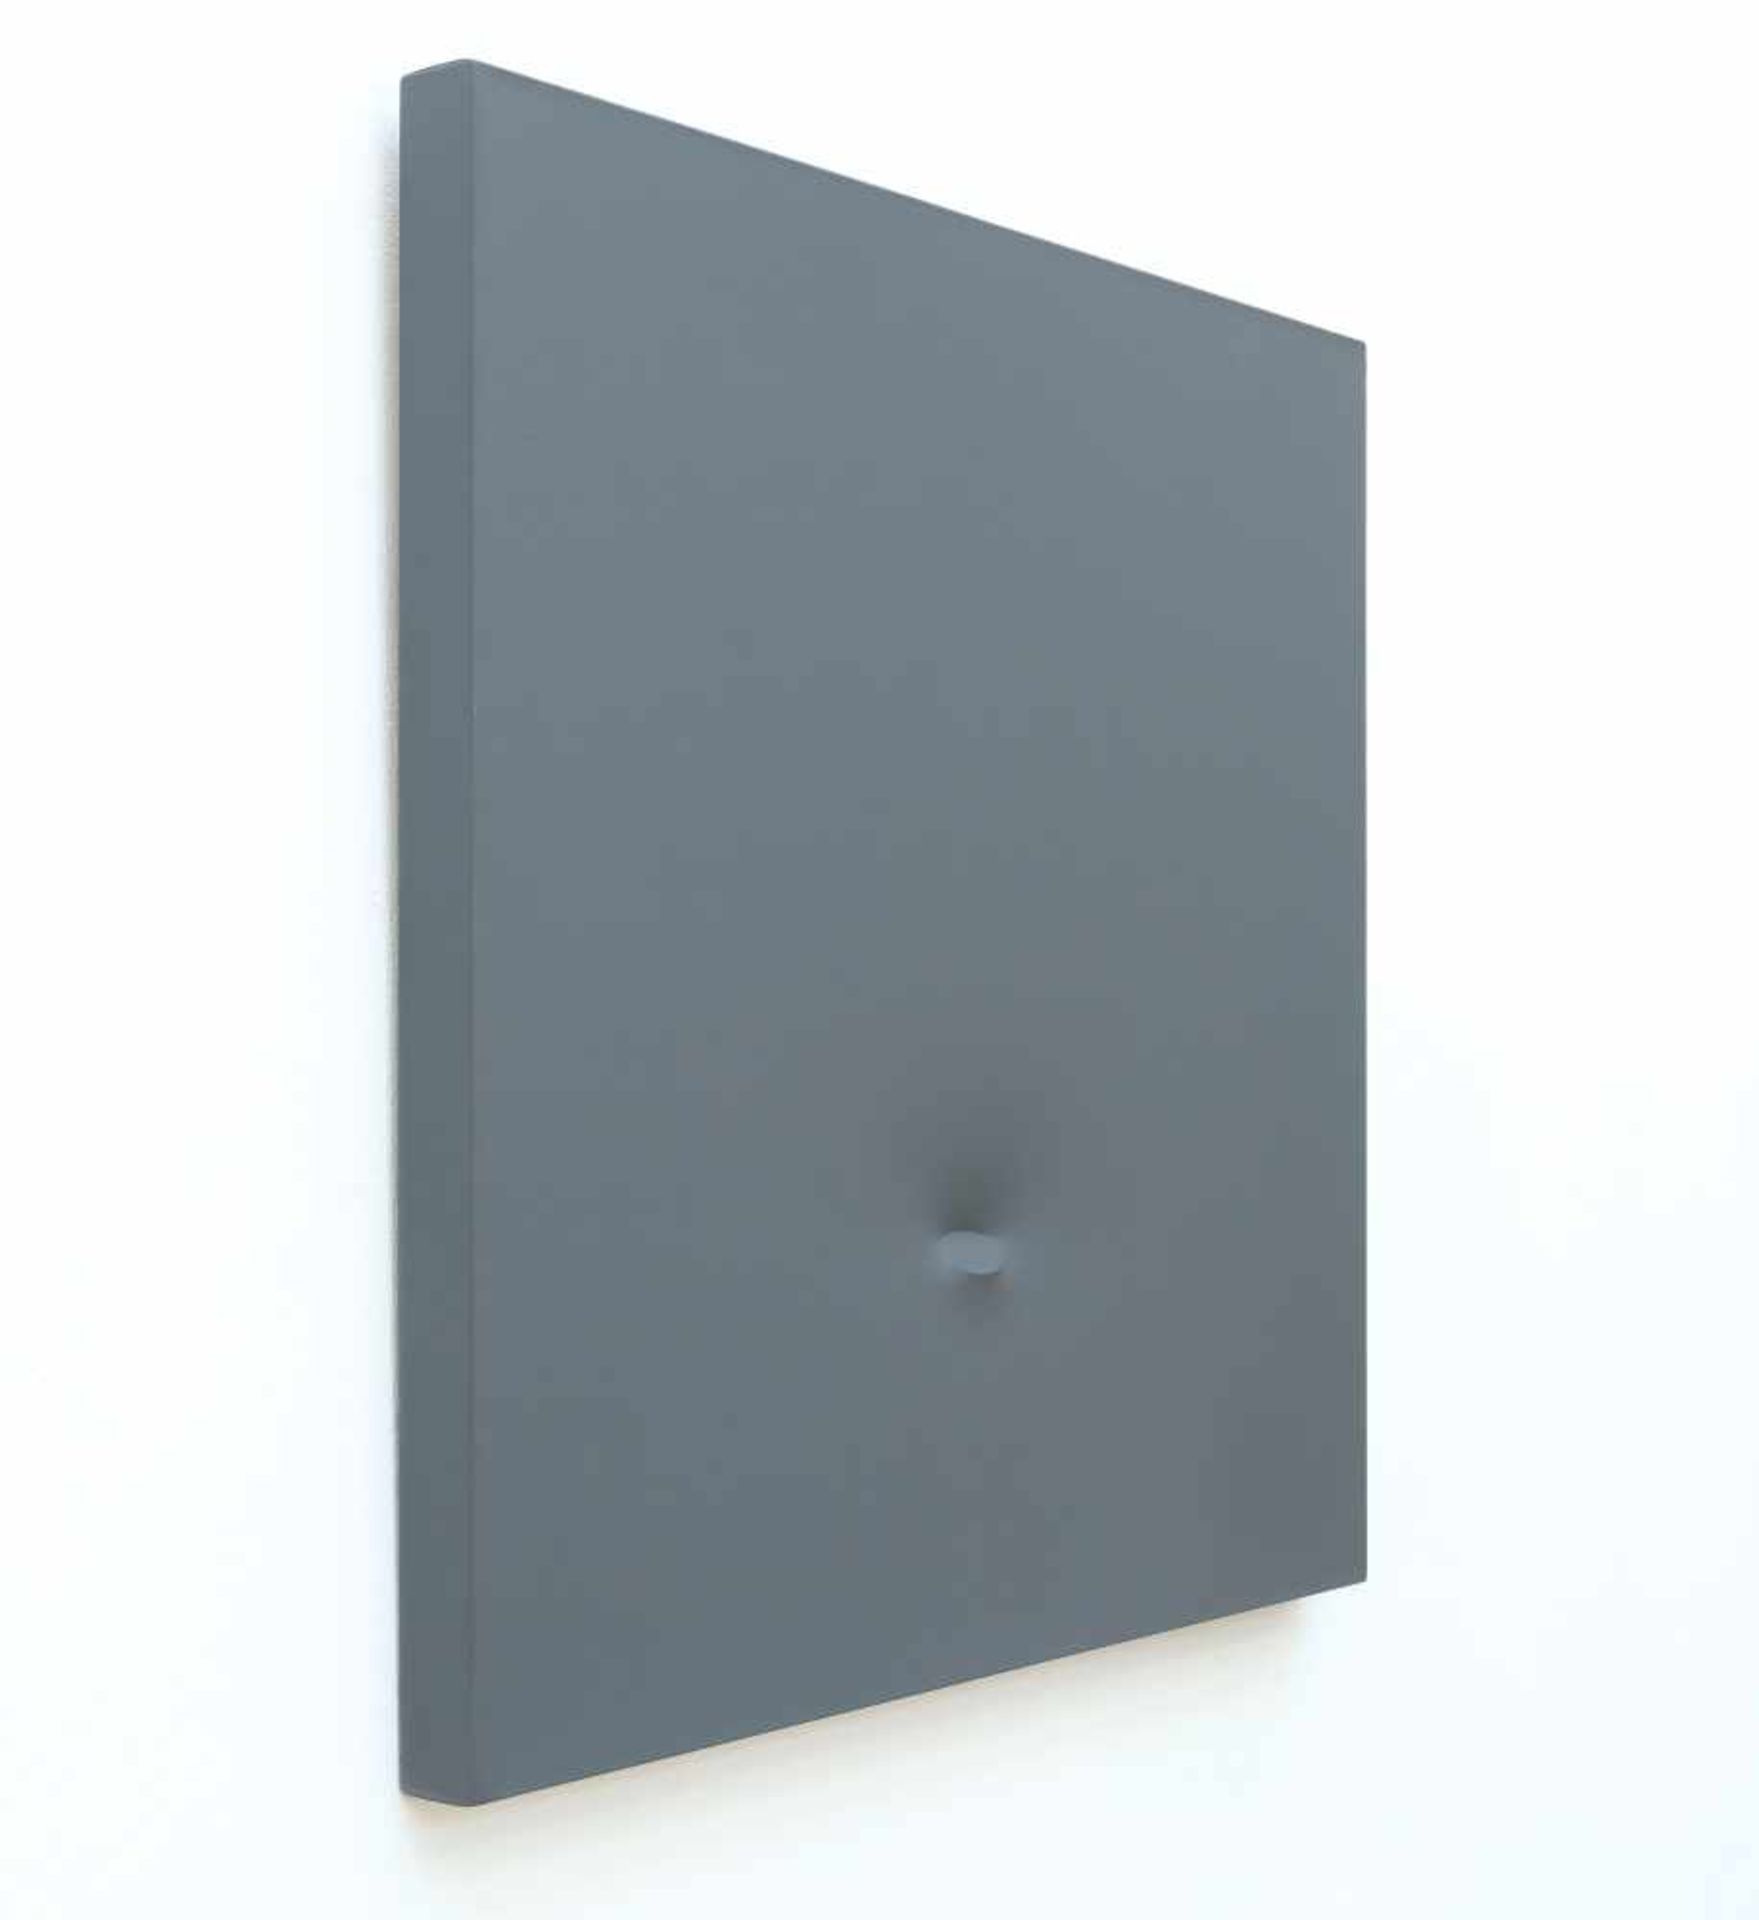 Turi Simeti1929 AlcamoUn ovale grigio (Graues Oval)Acryl auf geformter Leinwand. 1984. Ca. 100 x 100 - Bild 2 aus 3